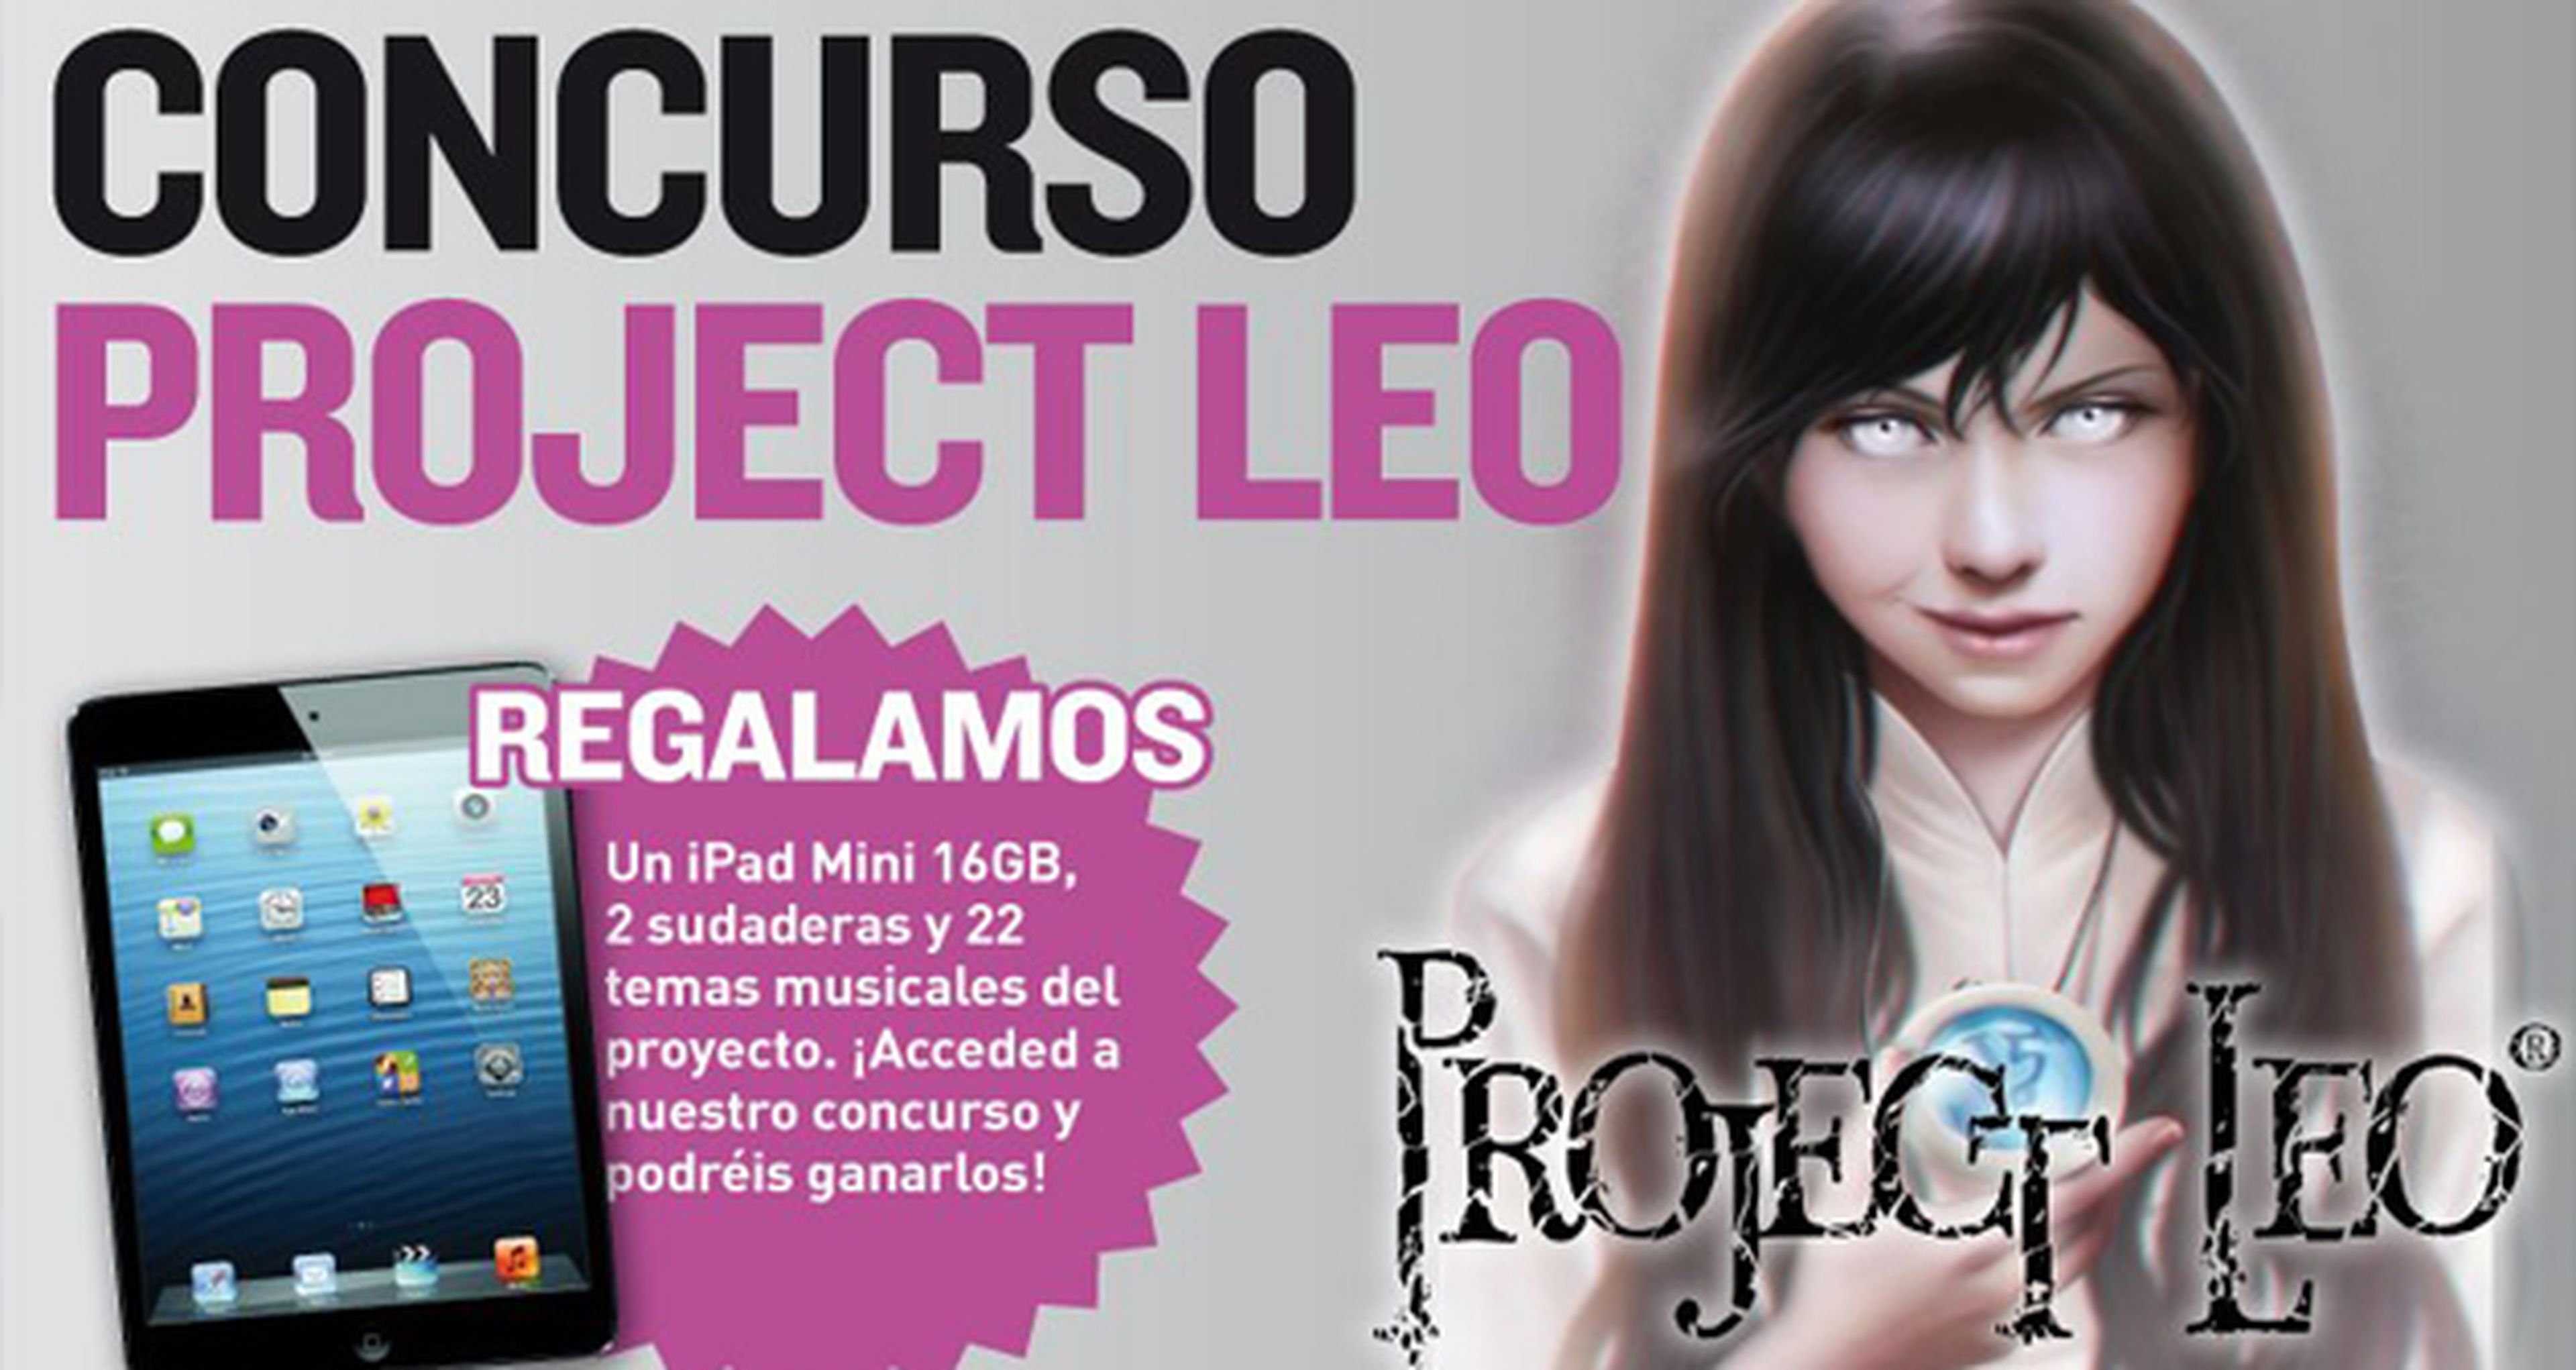 Concurso Project Leo: ¡Regalamos un iPad Mini!